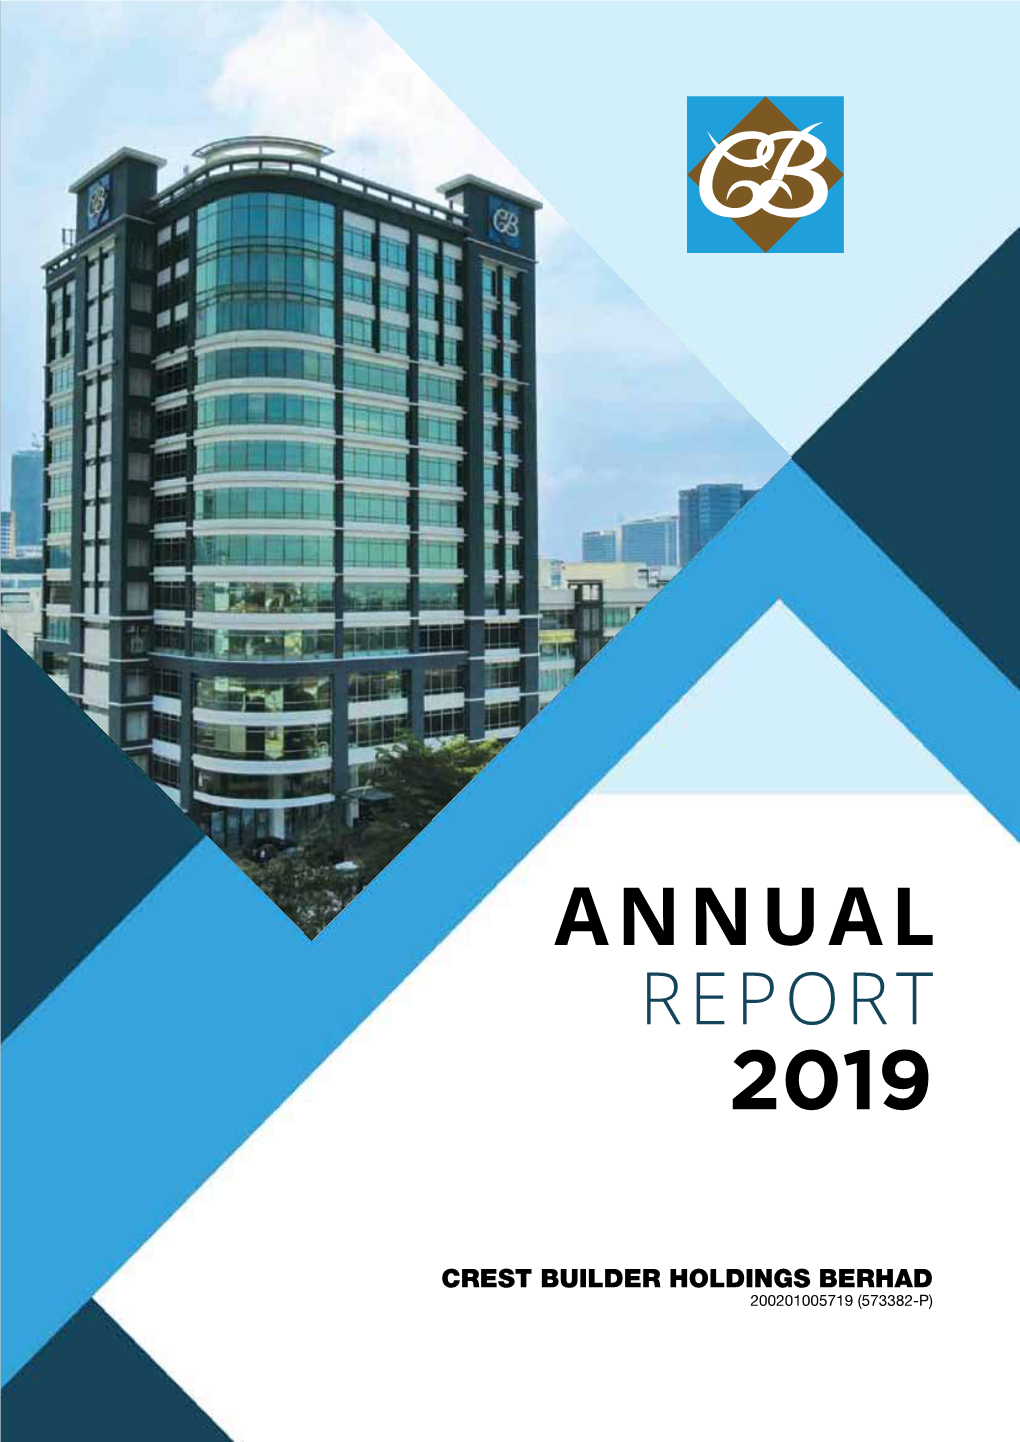 Crest Builder Holdings Berhad Annual Report 2019